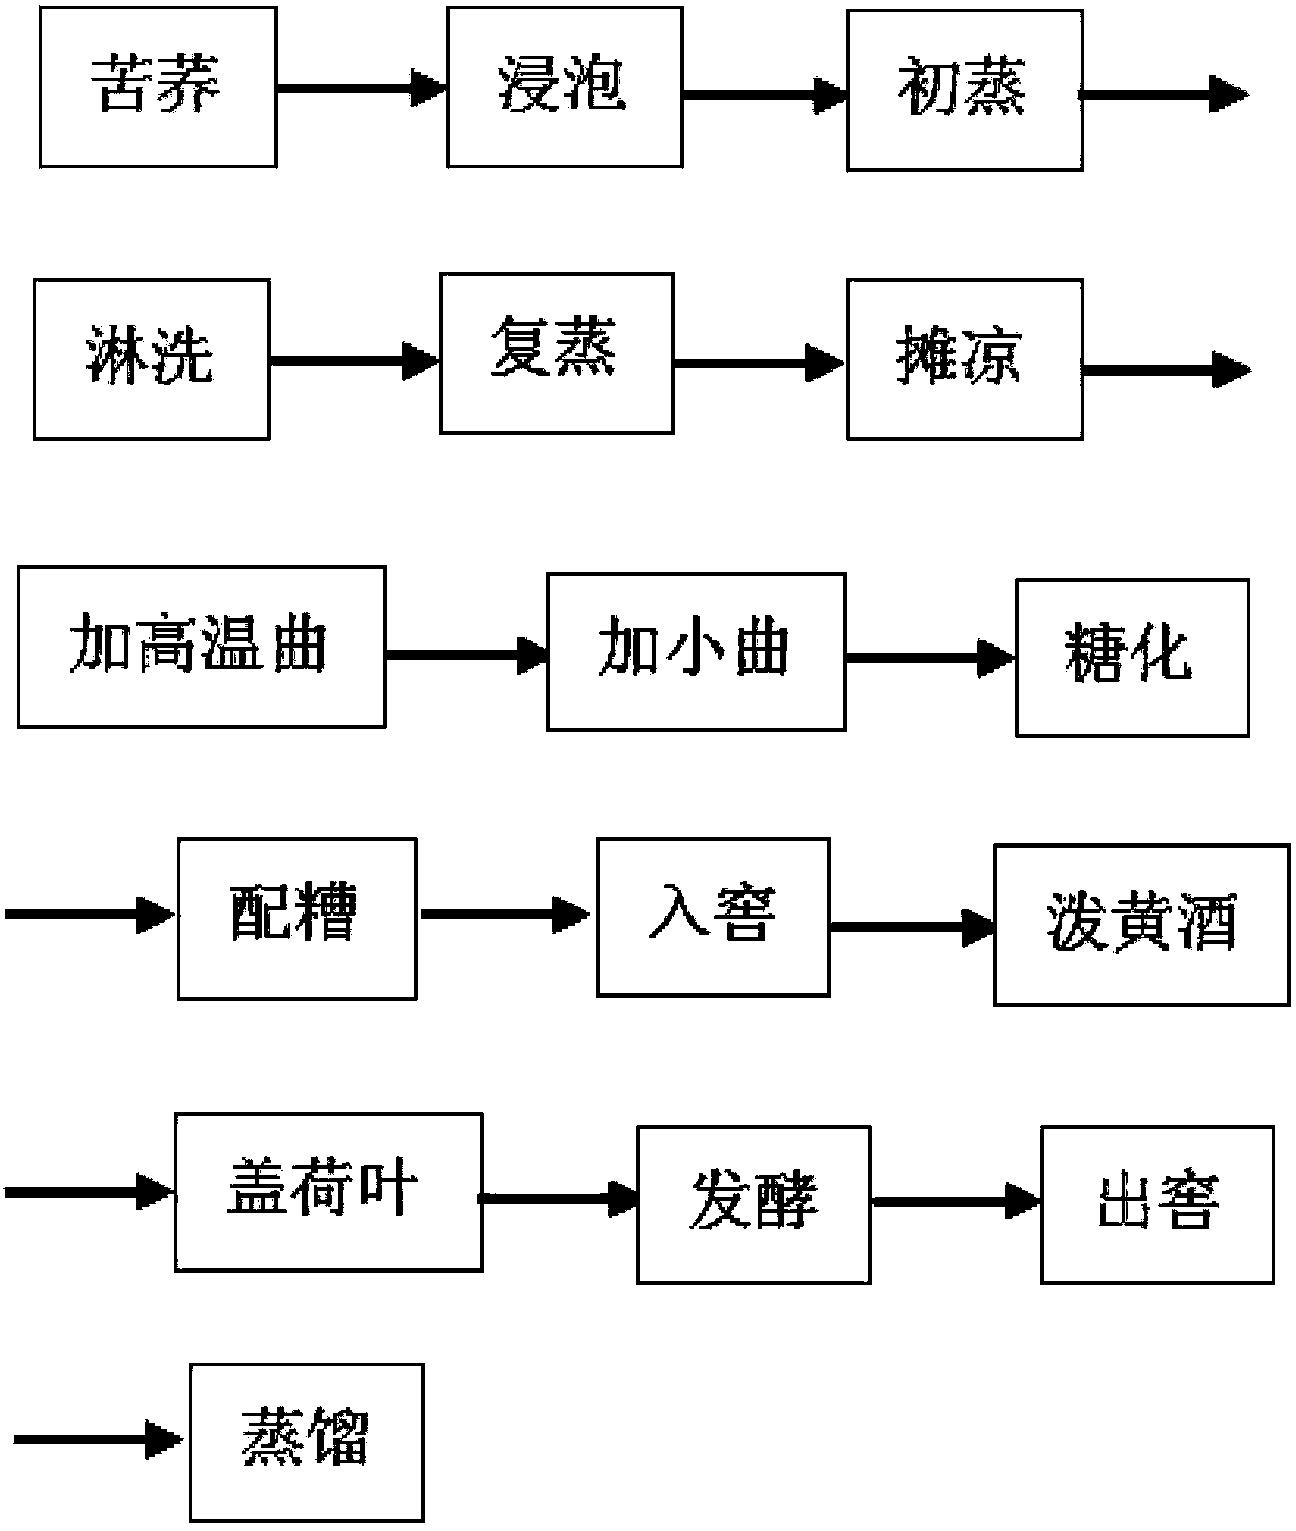 Brewing method used for fermenting tartary buckwheat wine through mixing Daqu and Xiaoqu